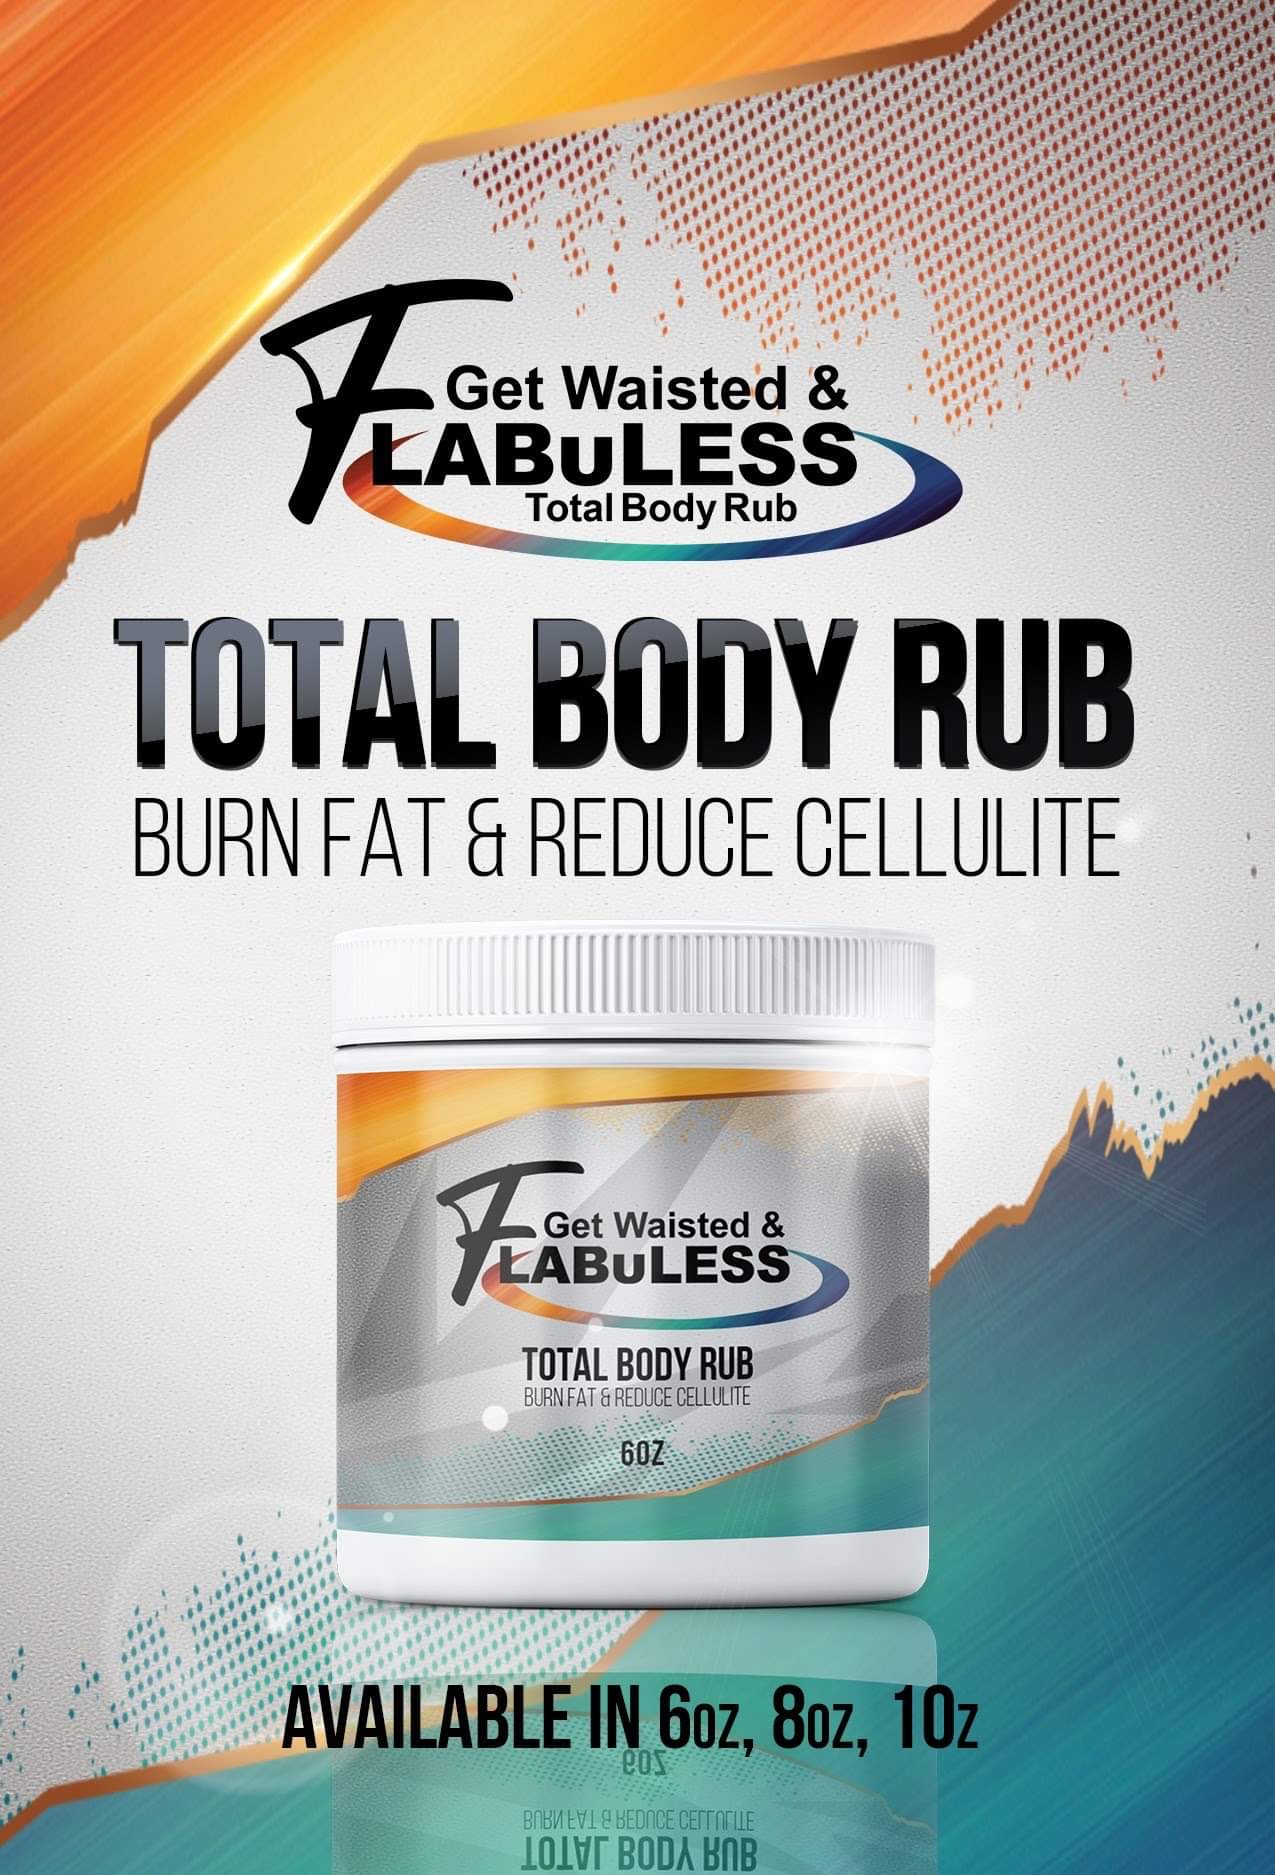 8oz Get Waisted & FLABuLESS Total Body Rub